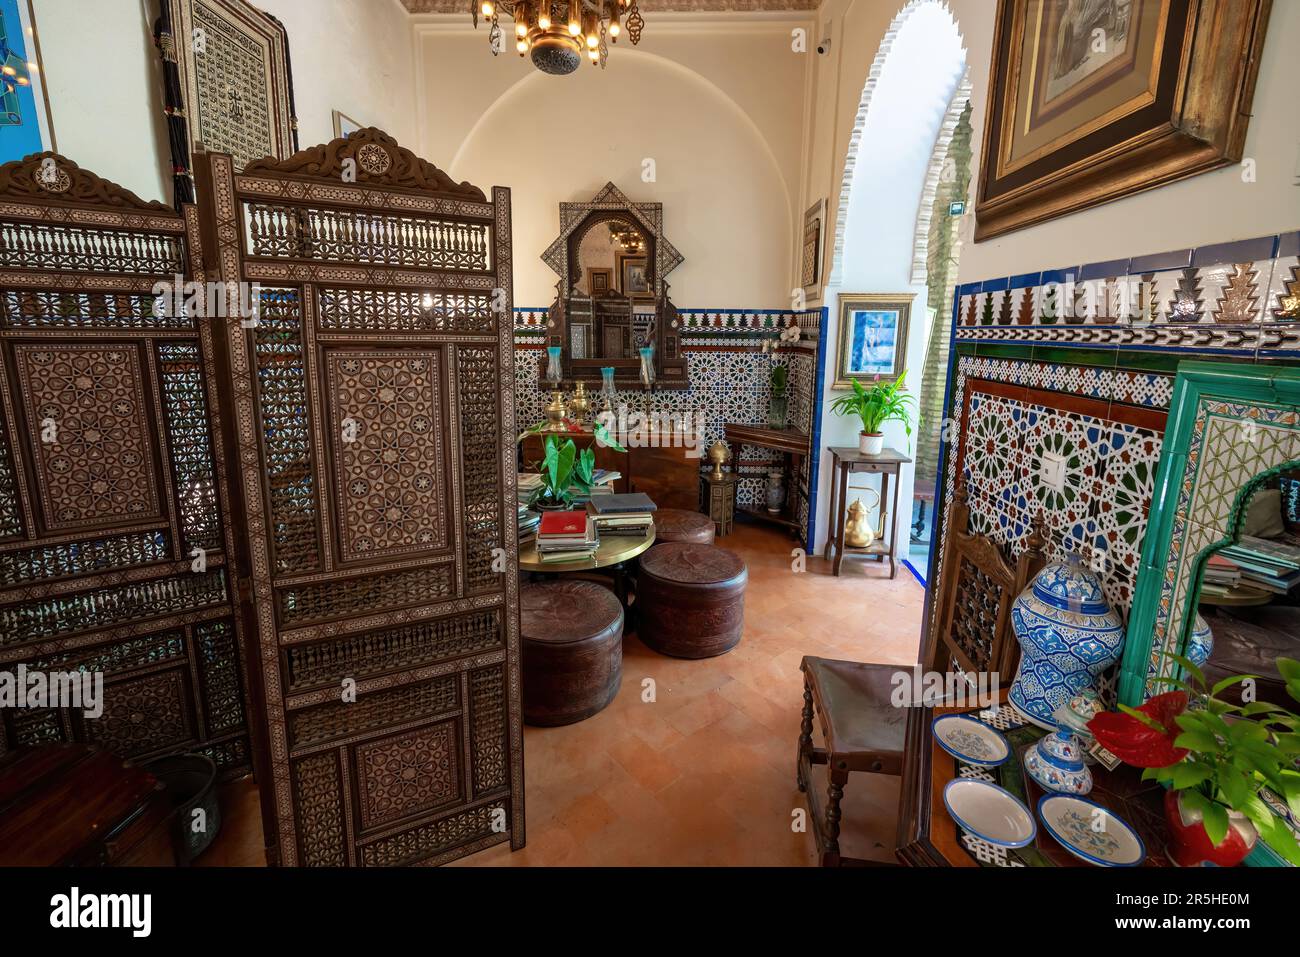 Interior Room of Casa Andalusi (House of Andalusia) - Cordoba, Andalusia, Spain Stock Photo